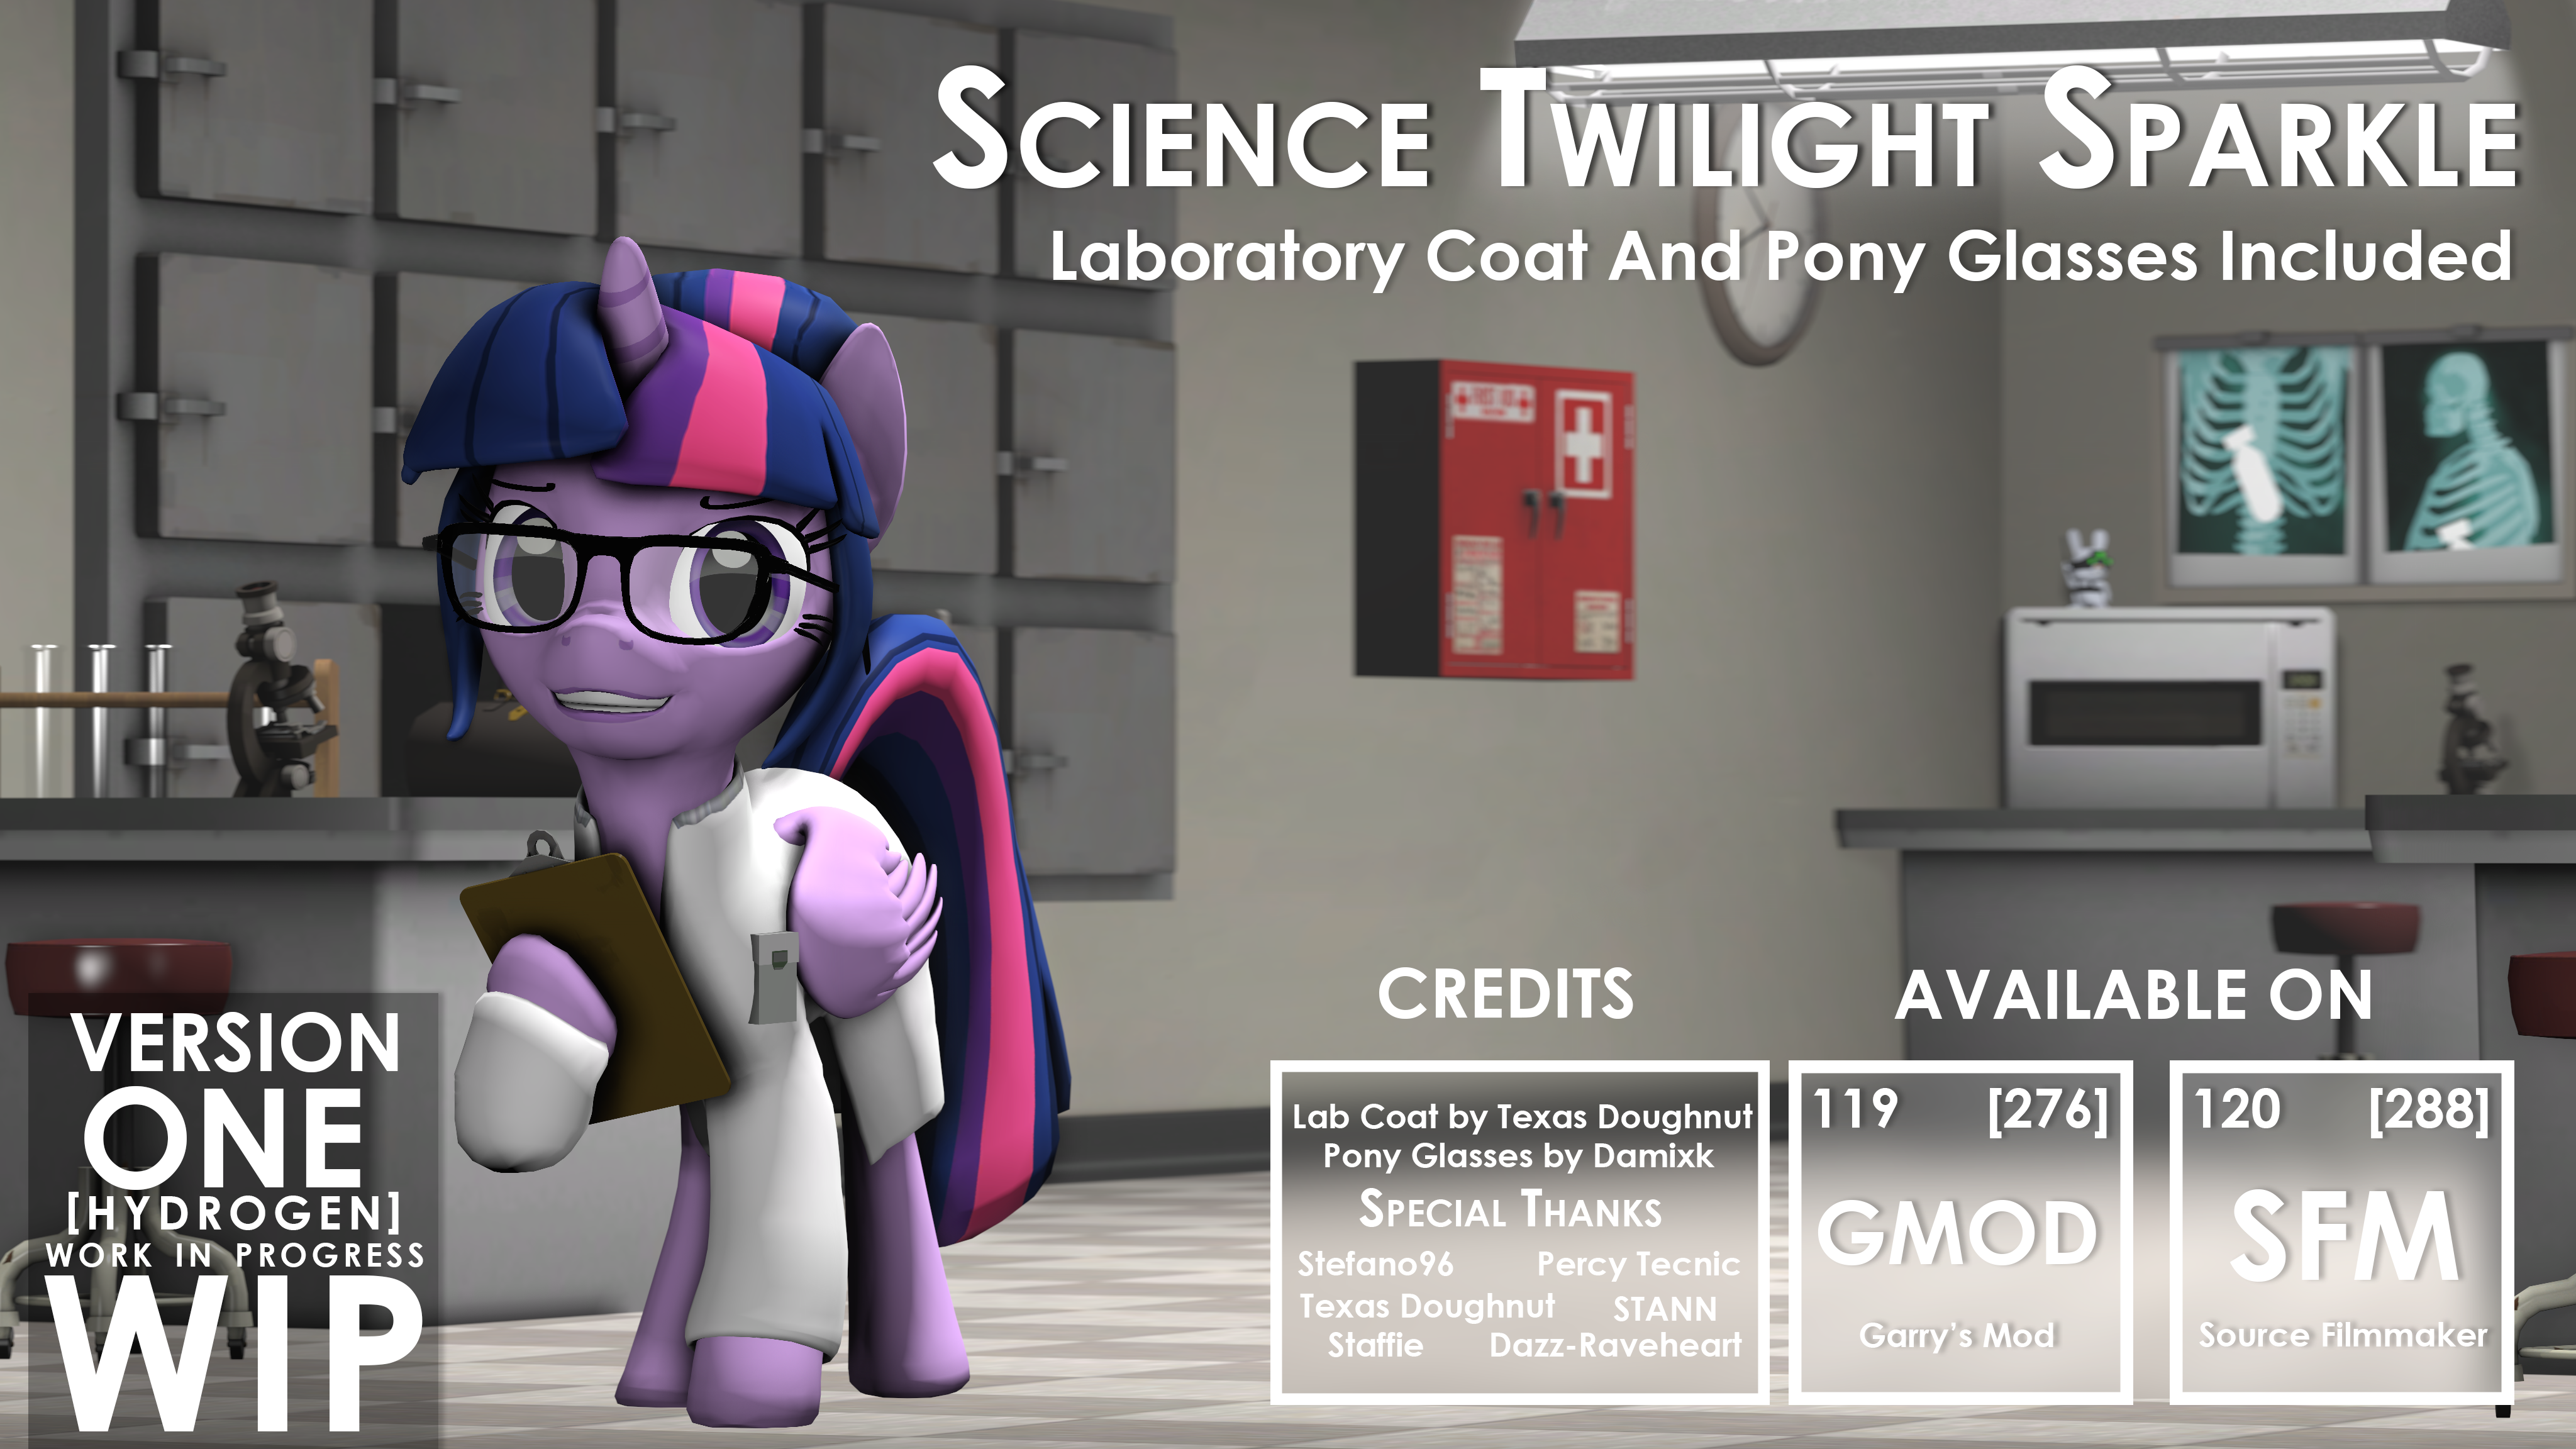 [DL] Scientific Twilight Sparkle - V1 - Hydrogen